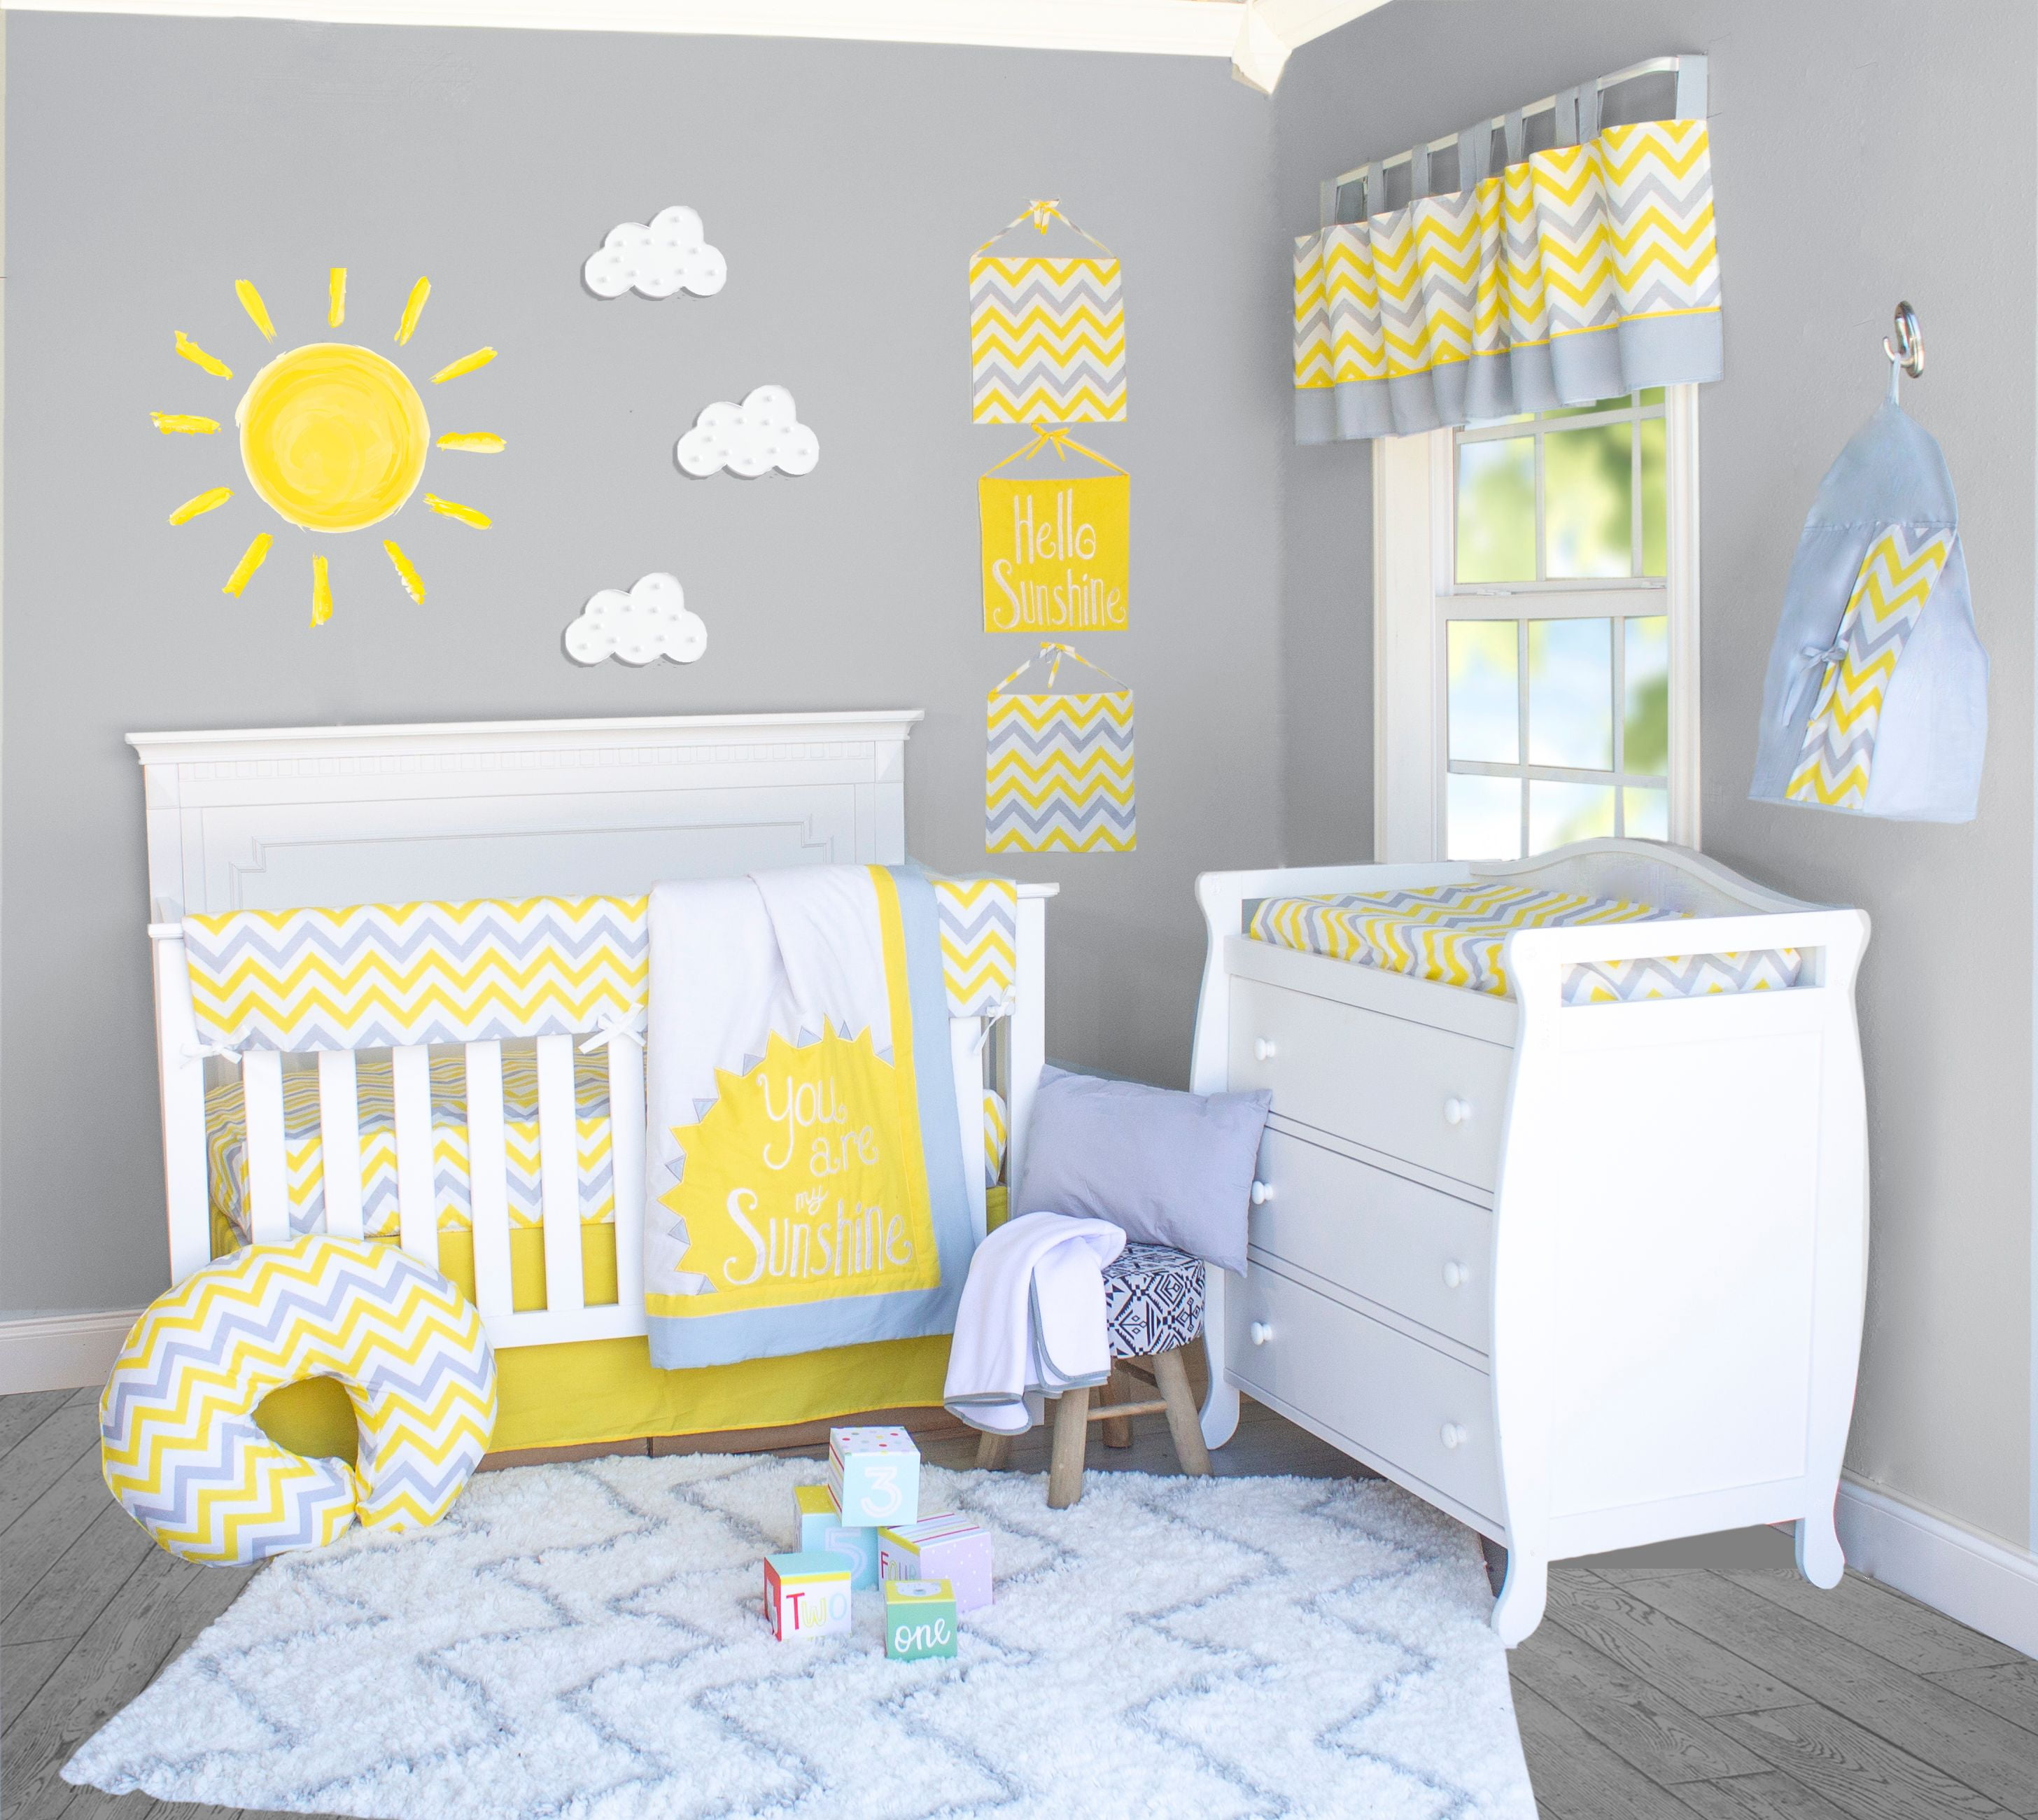 gray and yellow crib bedding